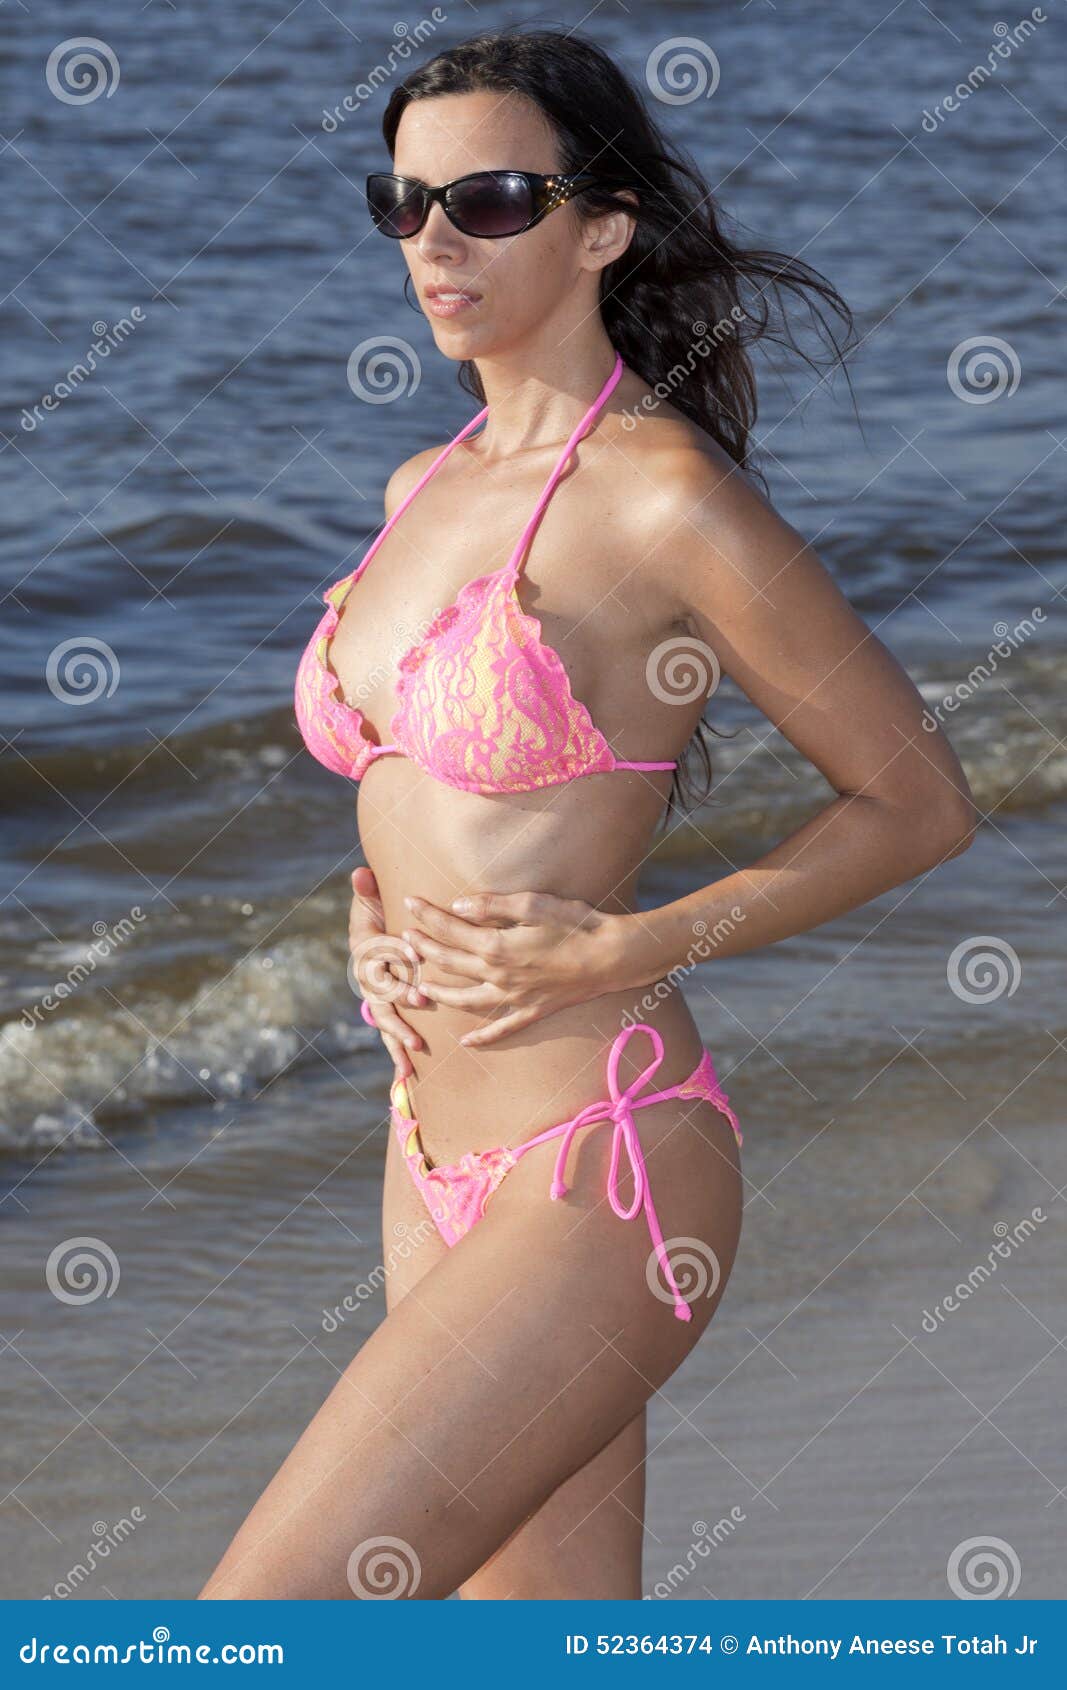 Beautiful Woman String Bikini: Over 1,771 Royalty-Free Licensable